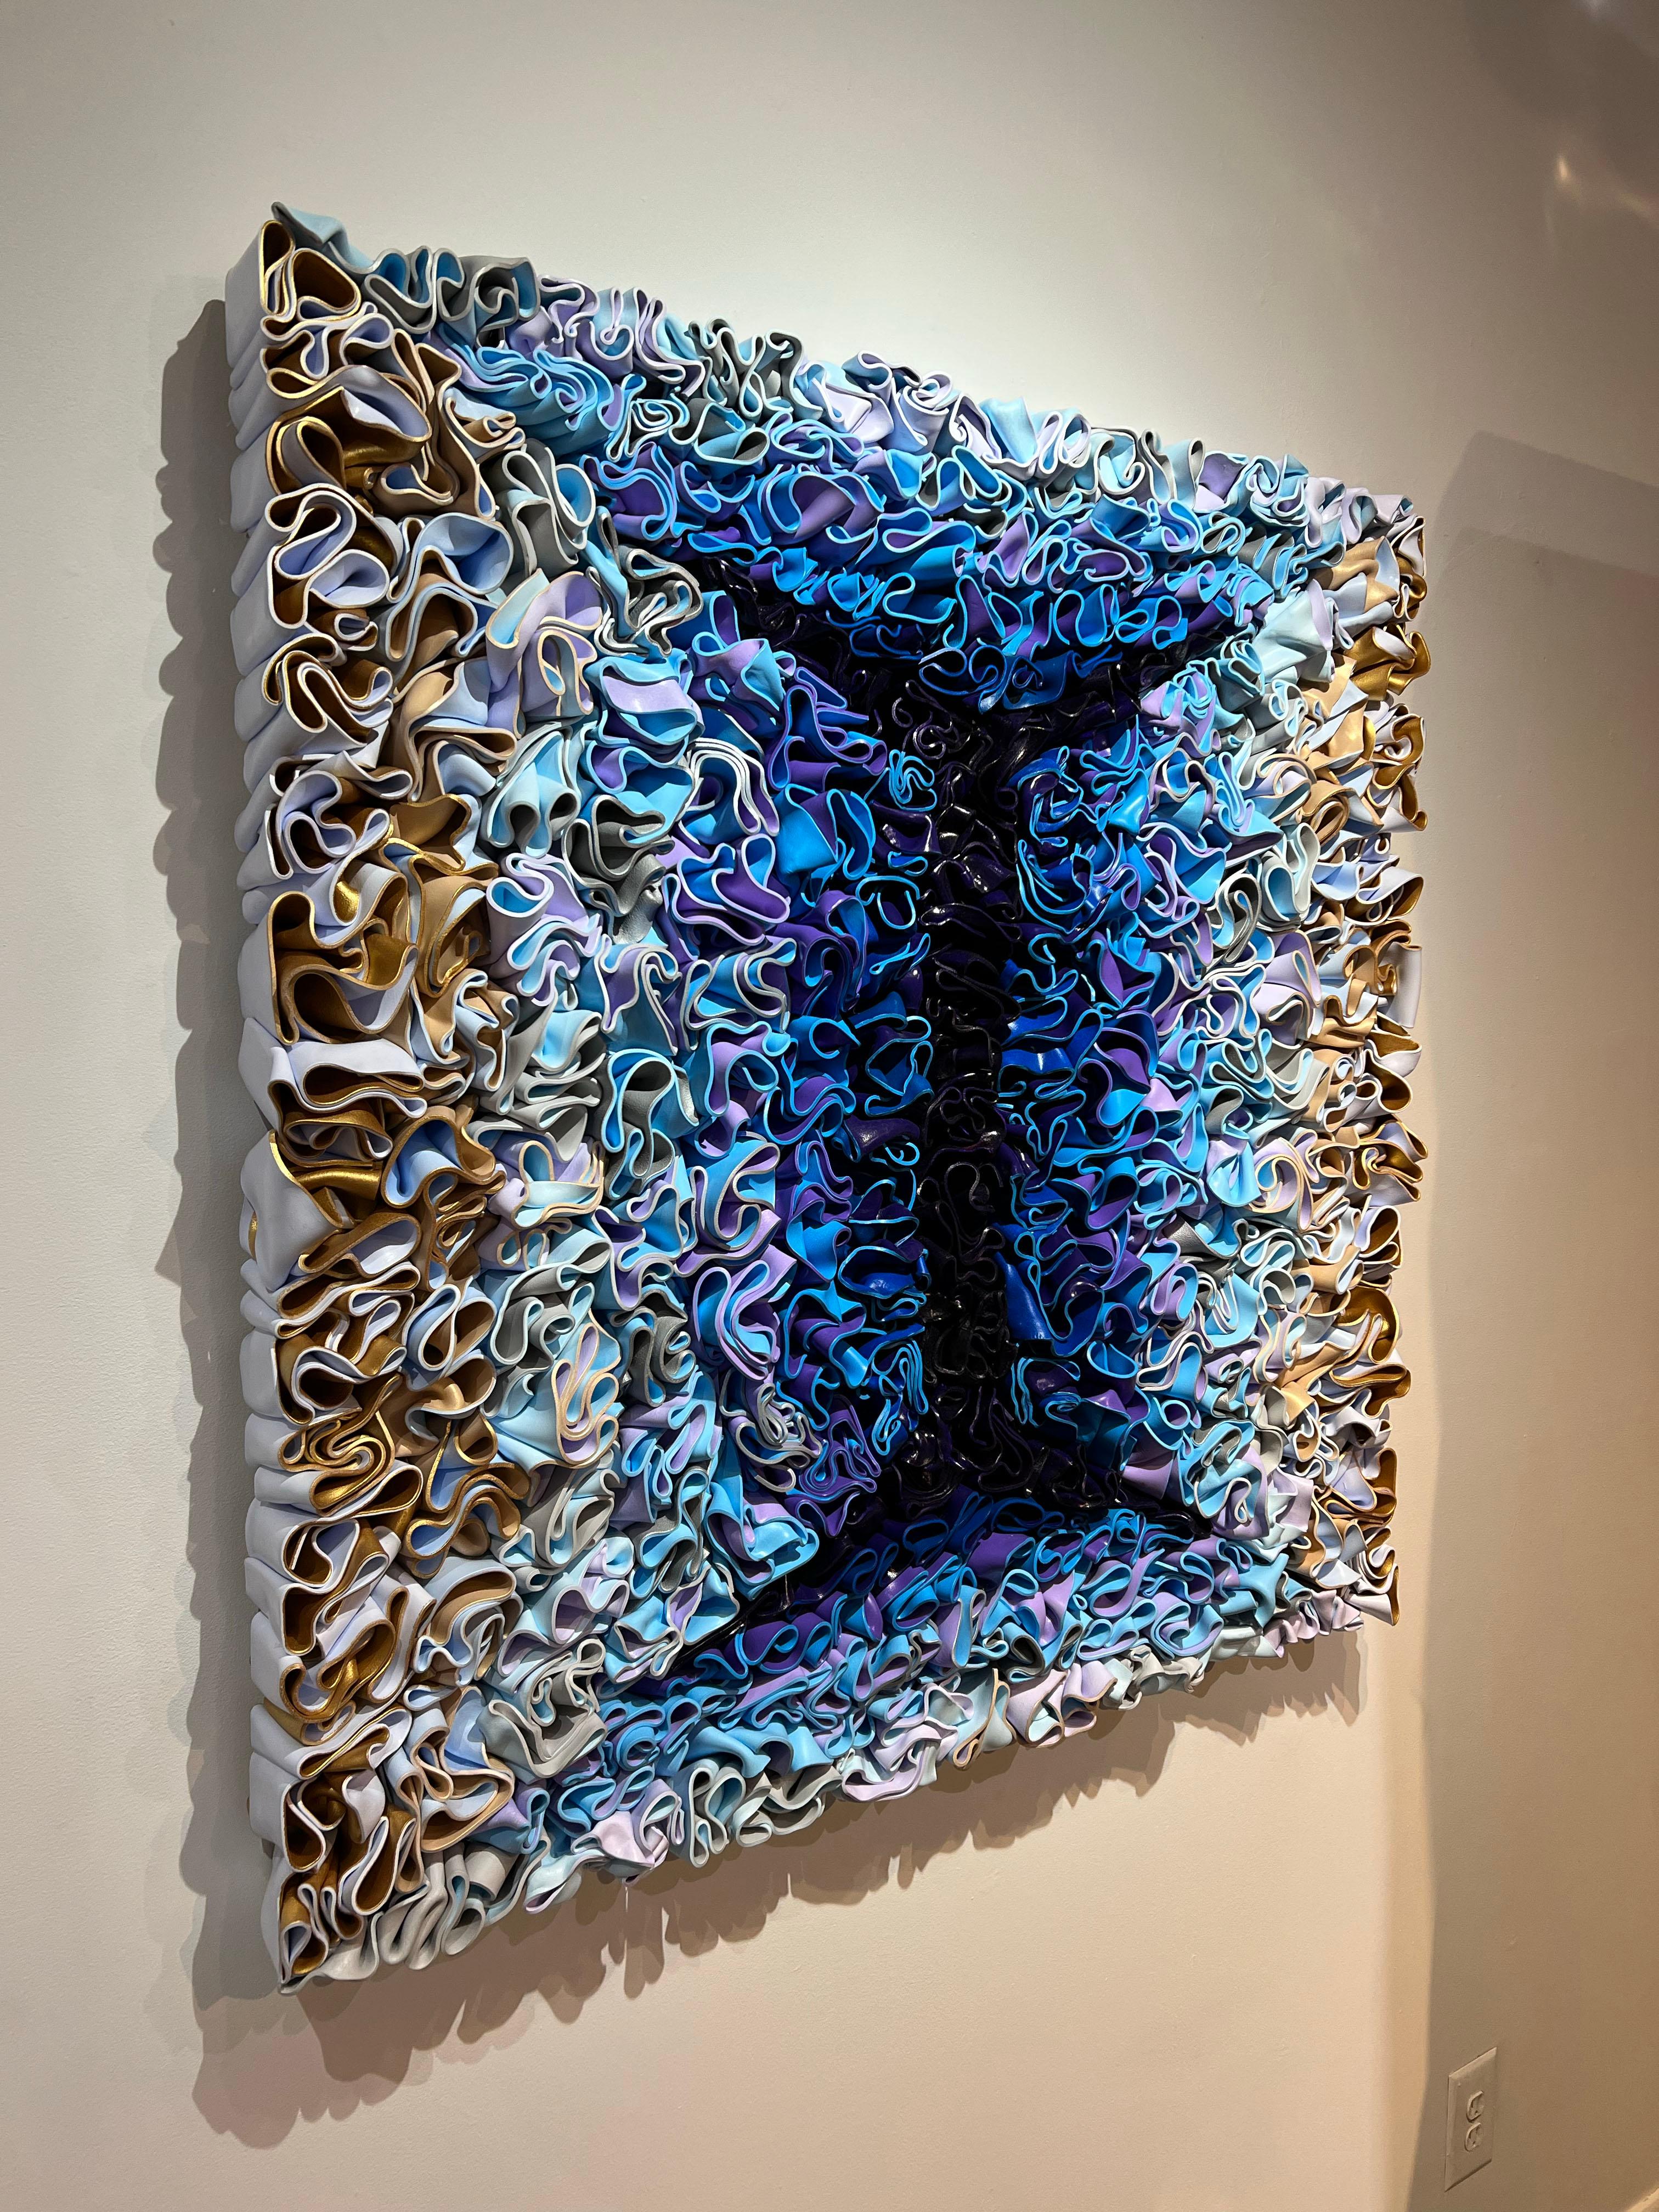 Tetrangle - Abstract Sculpture by Rick Lazes